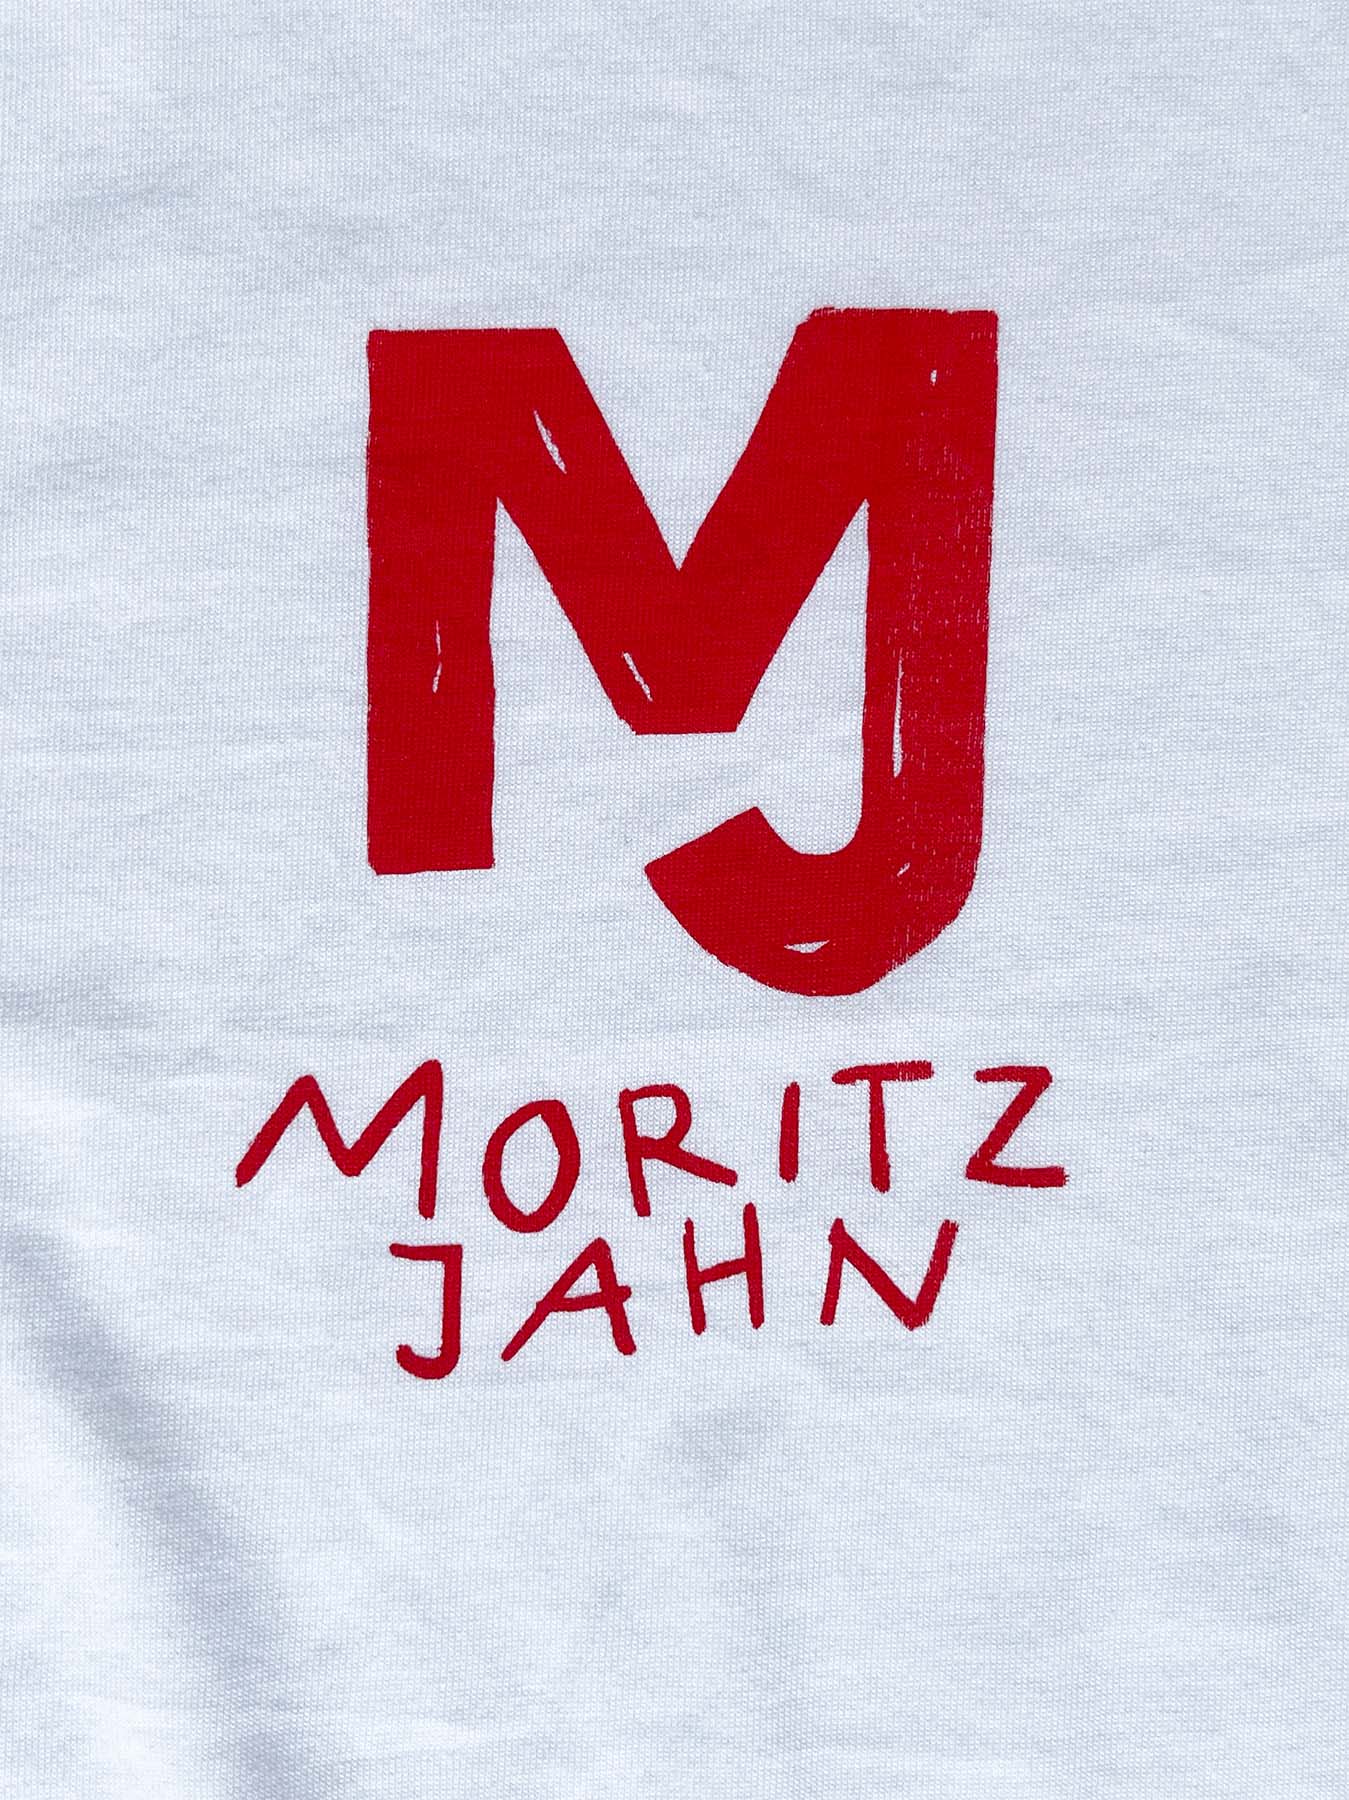 Moritz Jahn Limitiertes Soliloquy Shirt Siebdruck T-Shirt rot